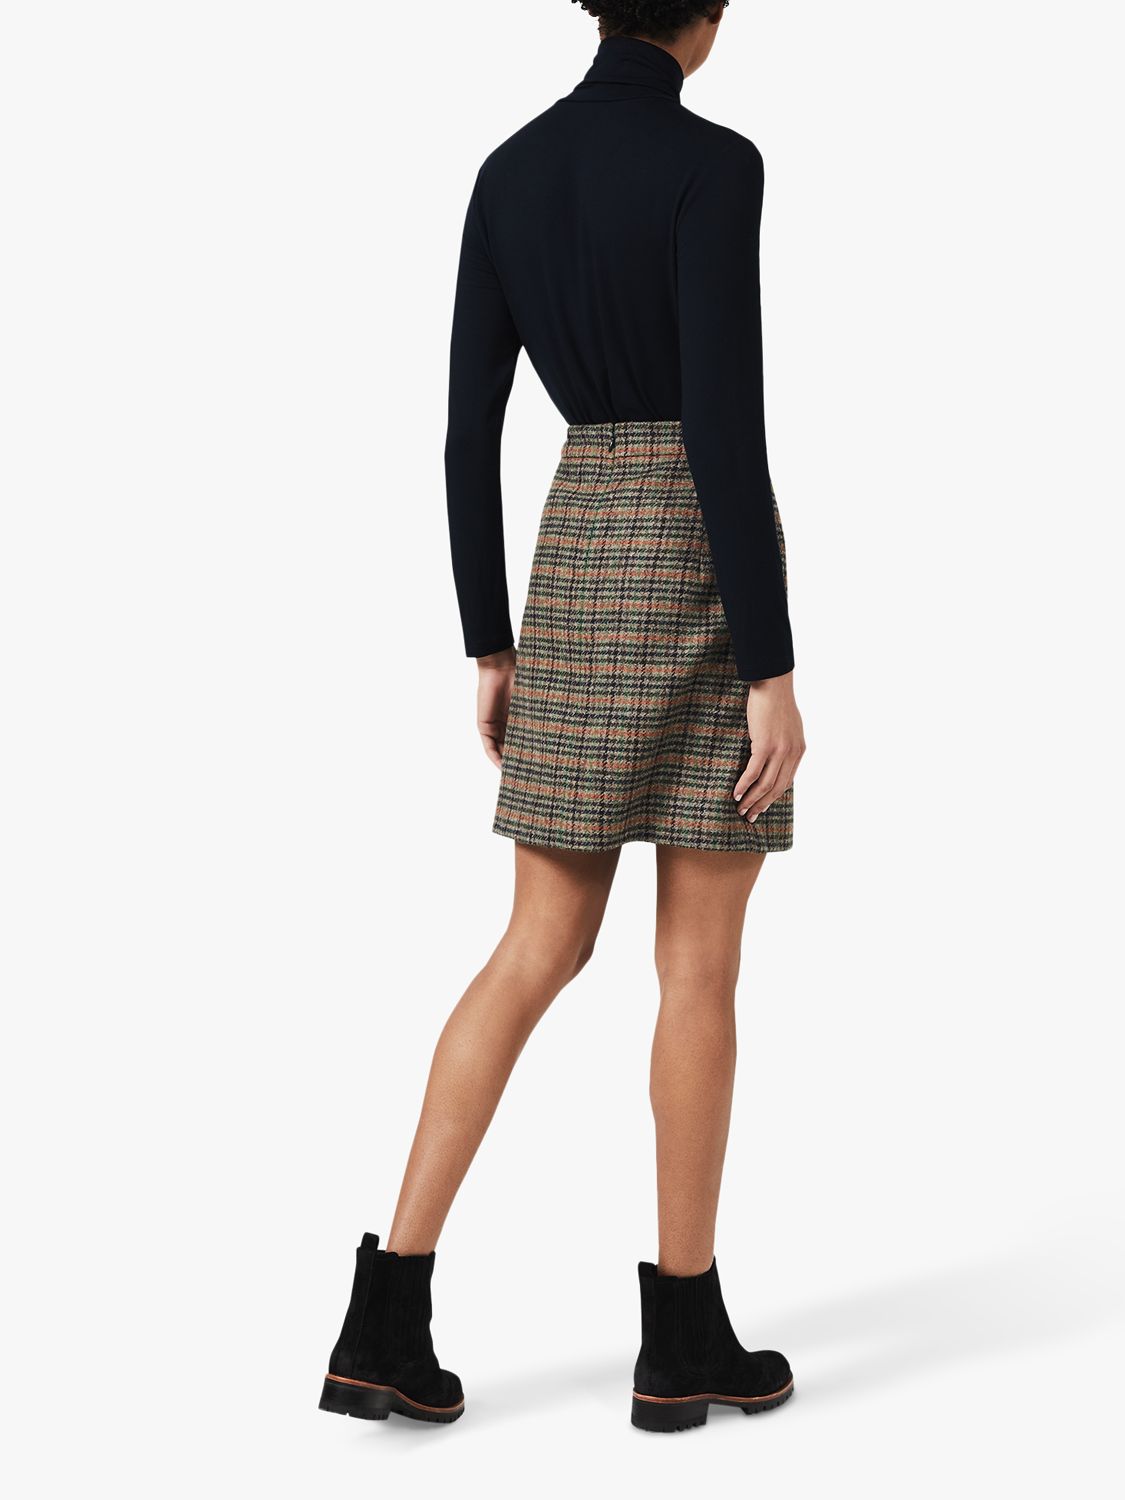 Hobbs Genevieve Check A-Line Wool Skirt, Camel/Multi